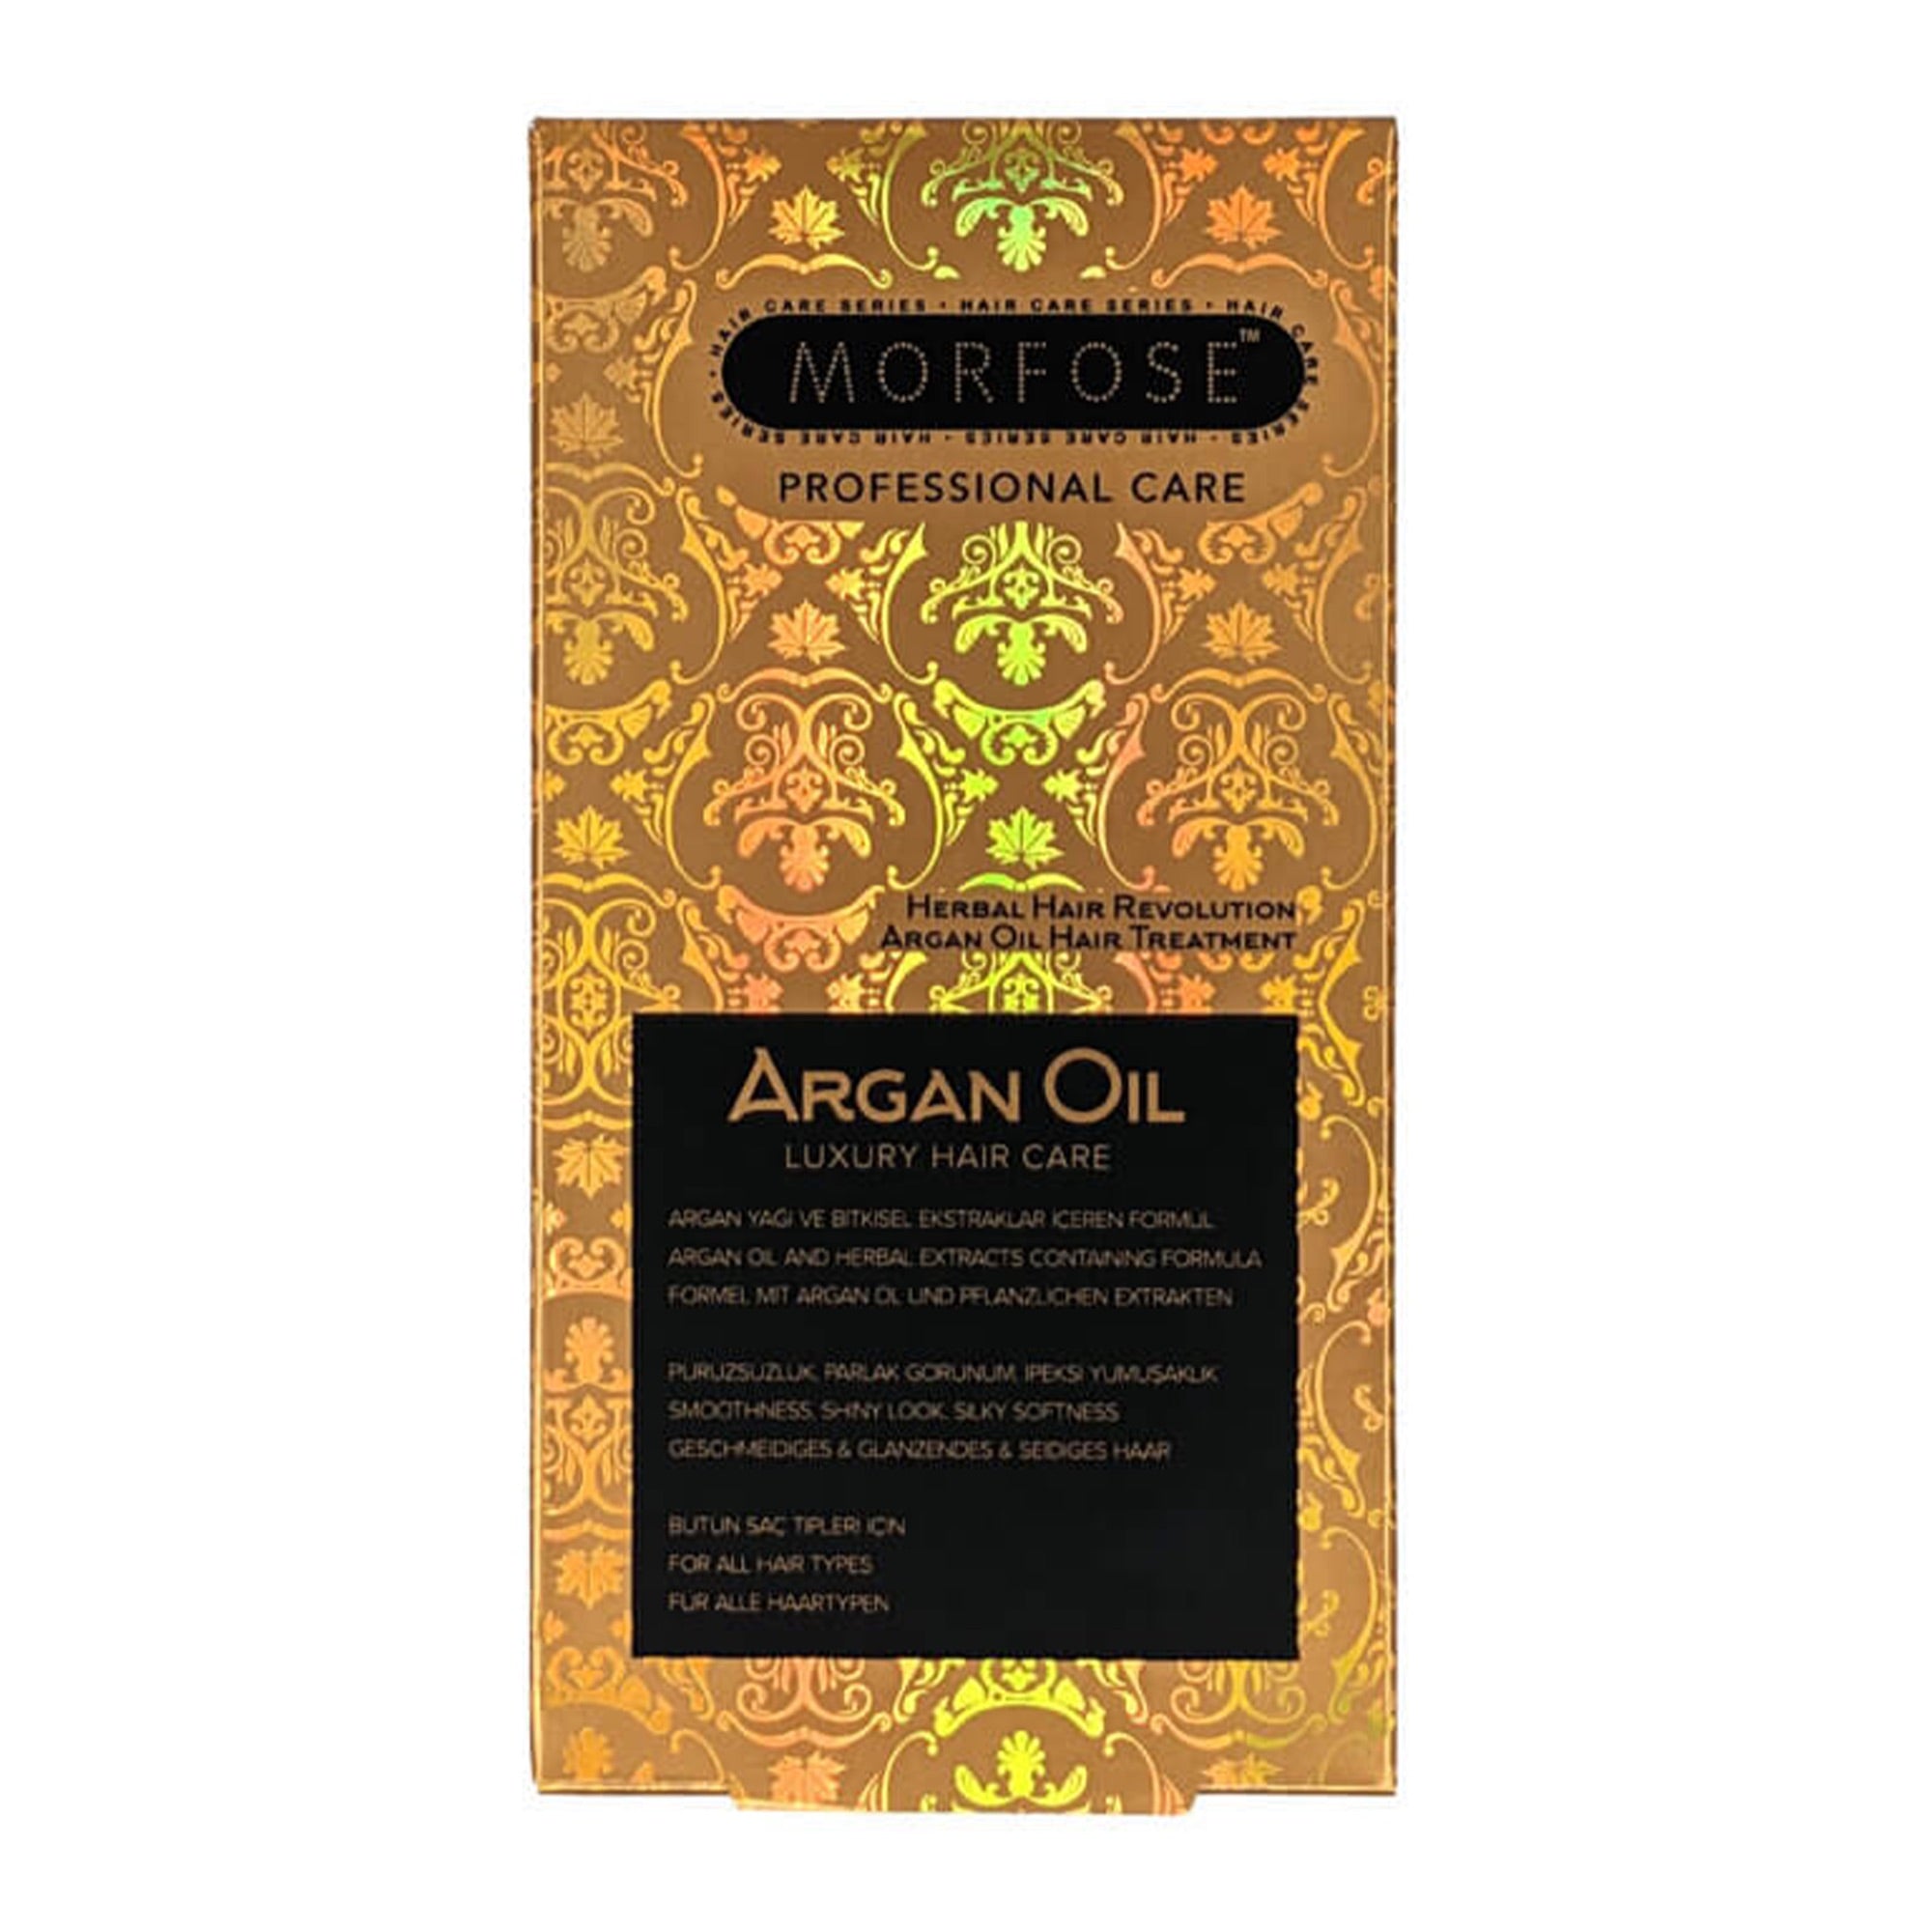 Morfose - Argan Oil Luxury Hair Care 100ml